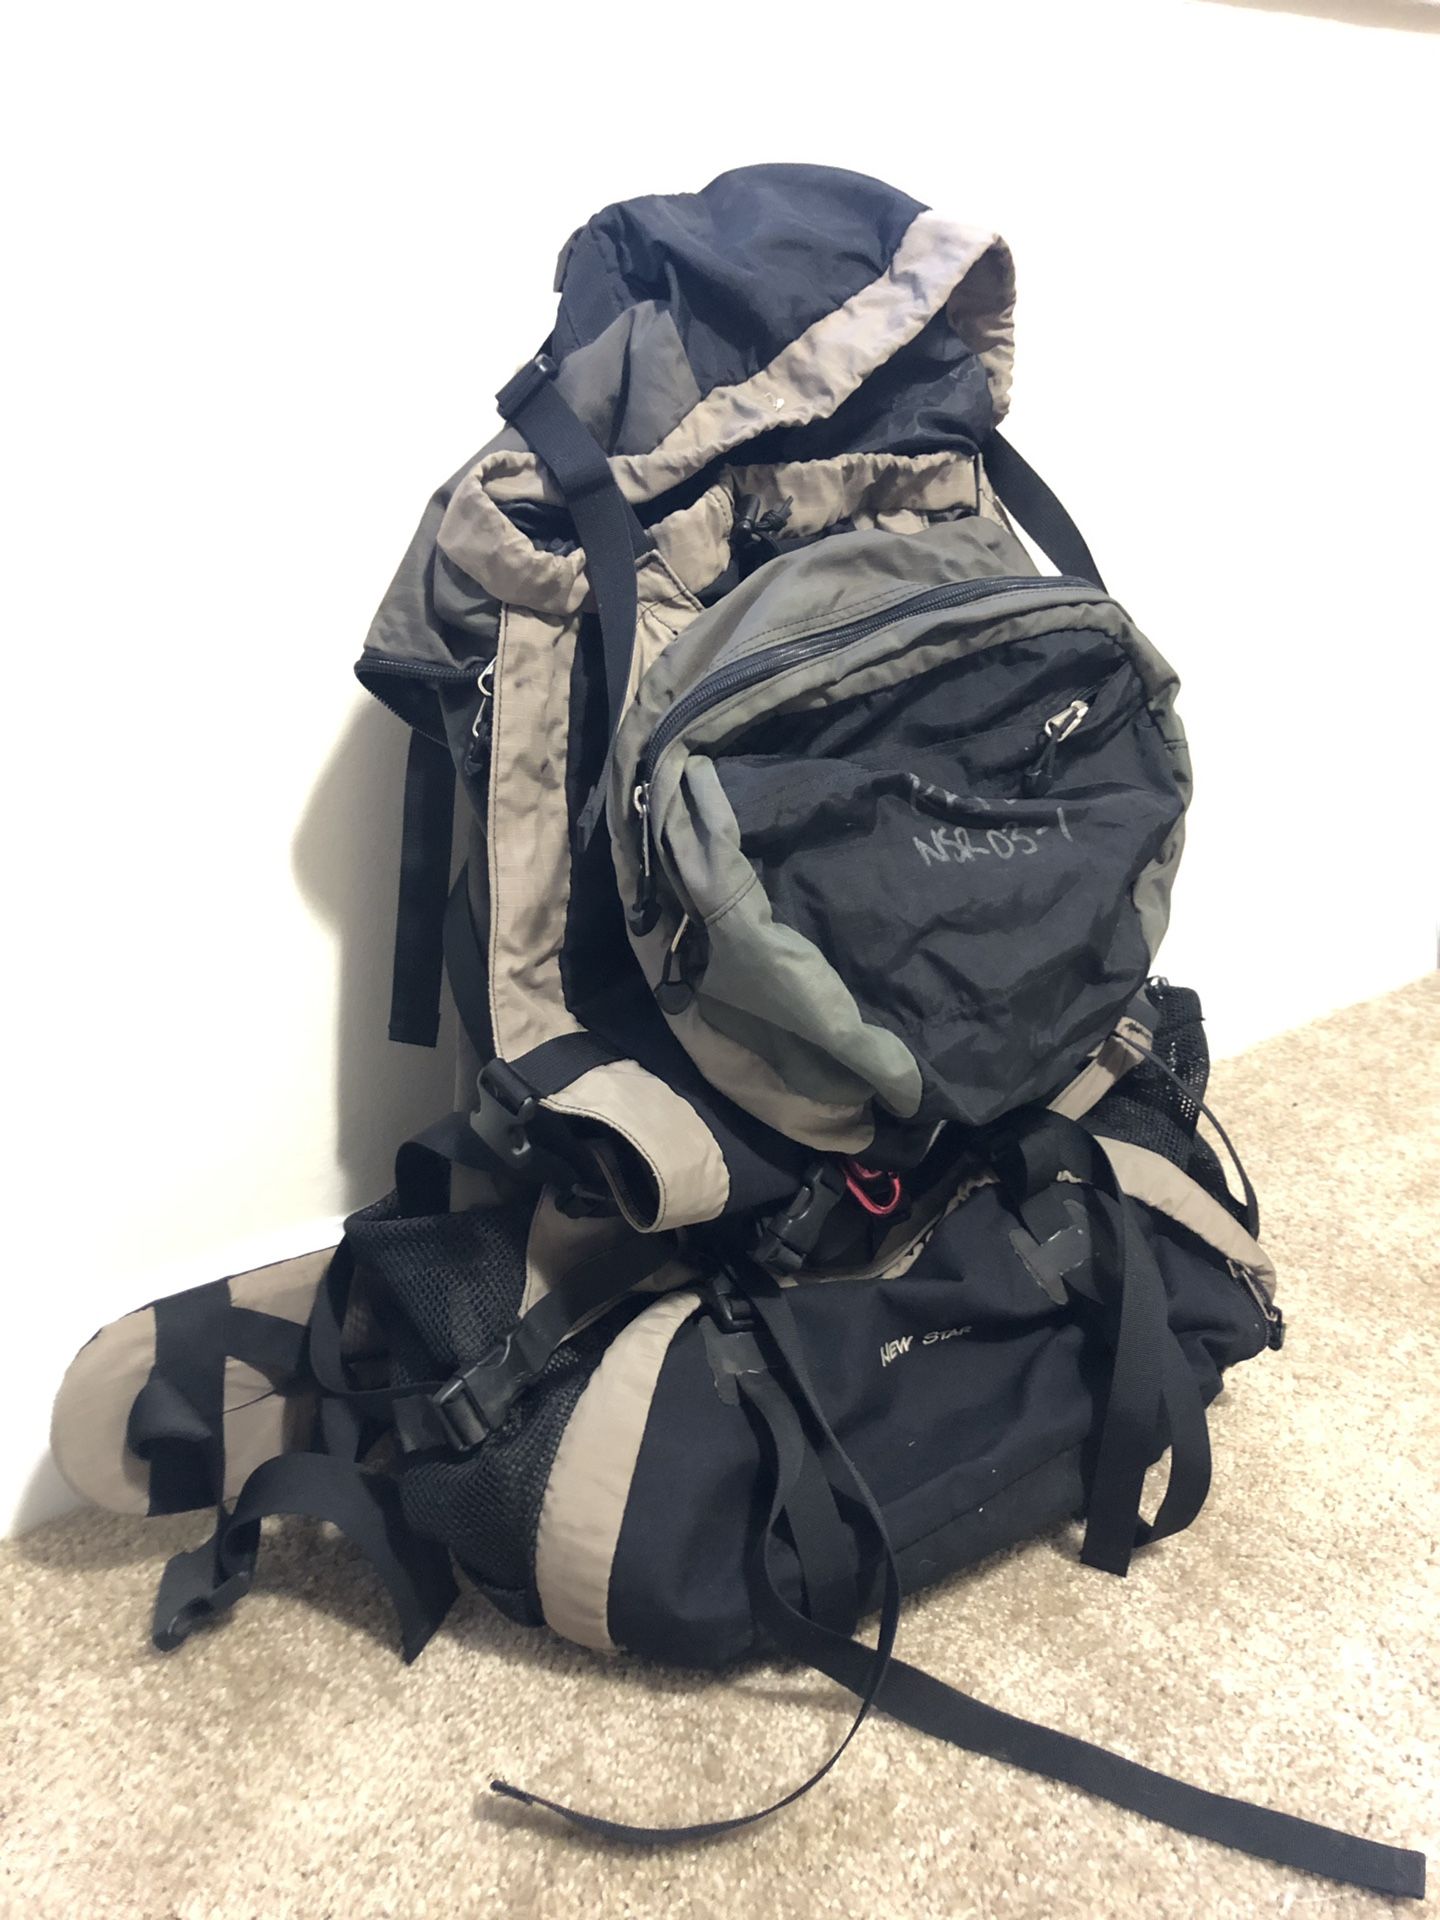 REI New Star backpacking bag